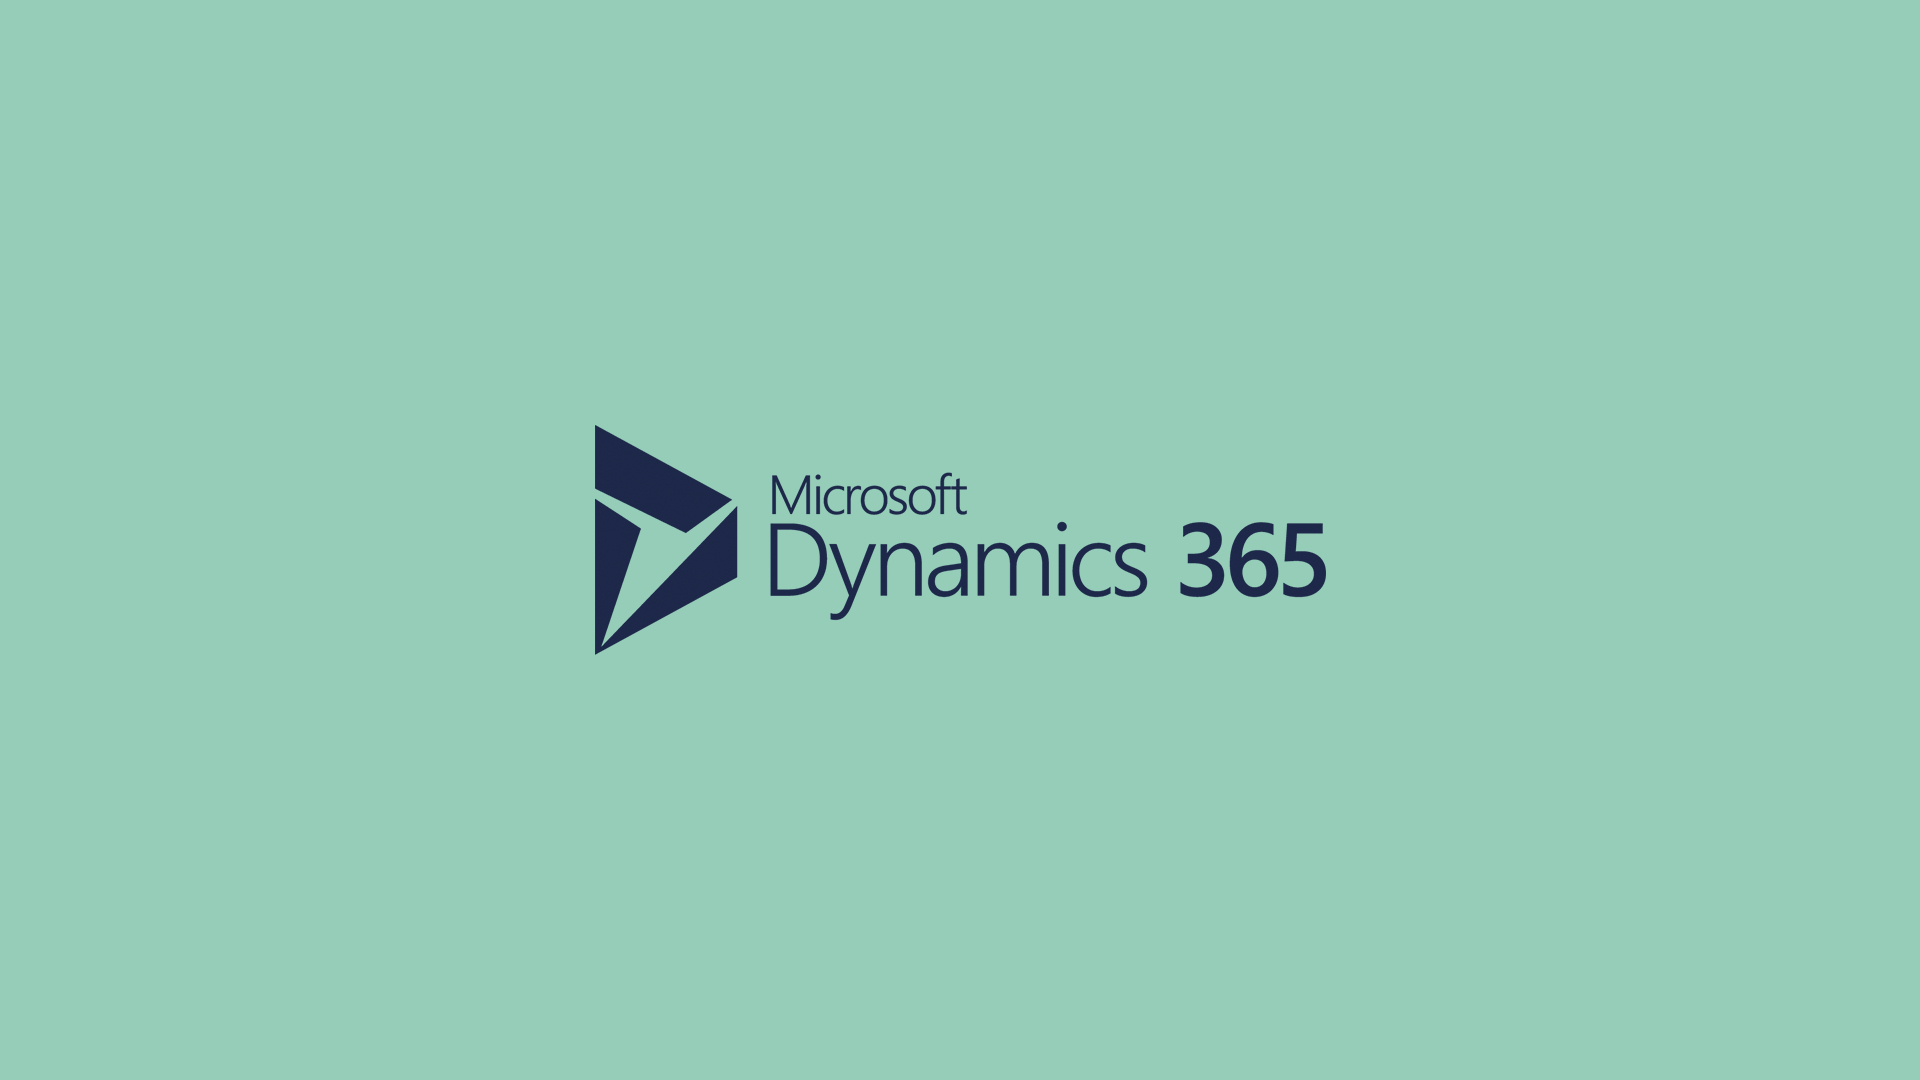 Digitalisera din verksamhet med Microsoft Dynamics 365!